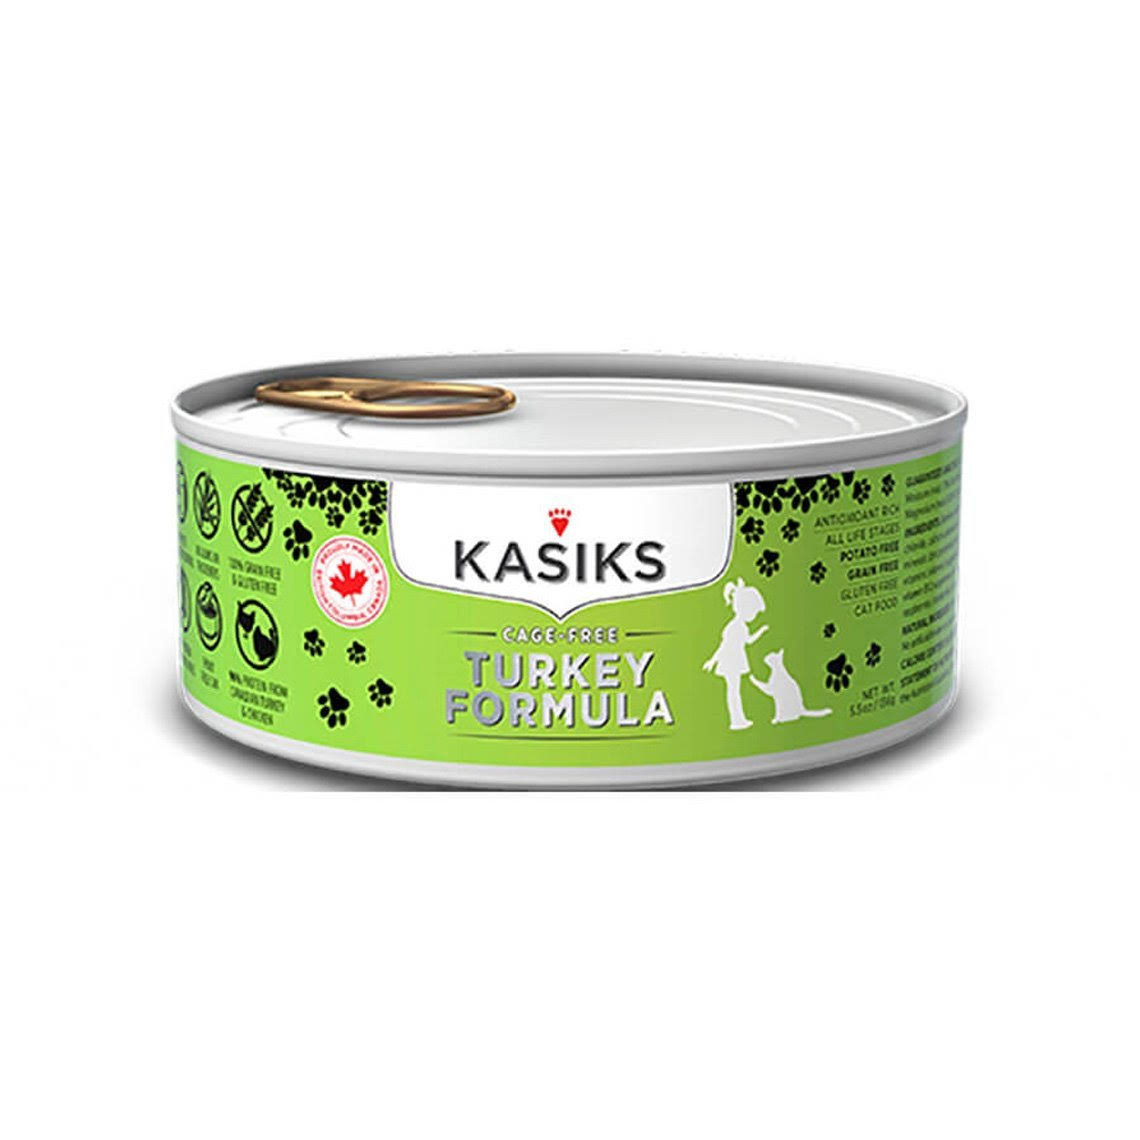 Kasiks Cage-Free Turkey Formula Grain-Free Canned Cat Food, 5.5-oz